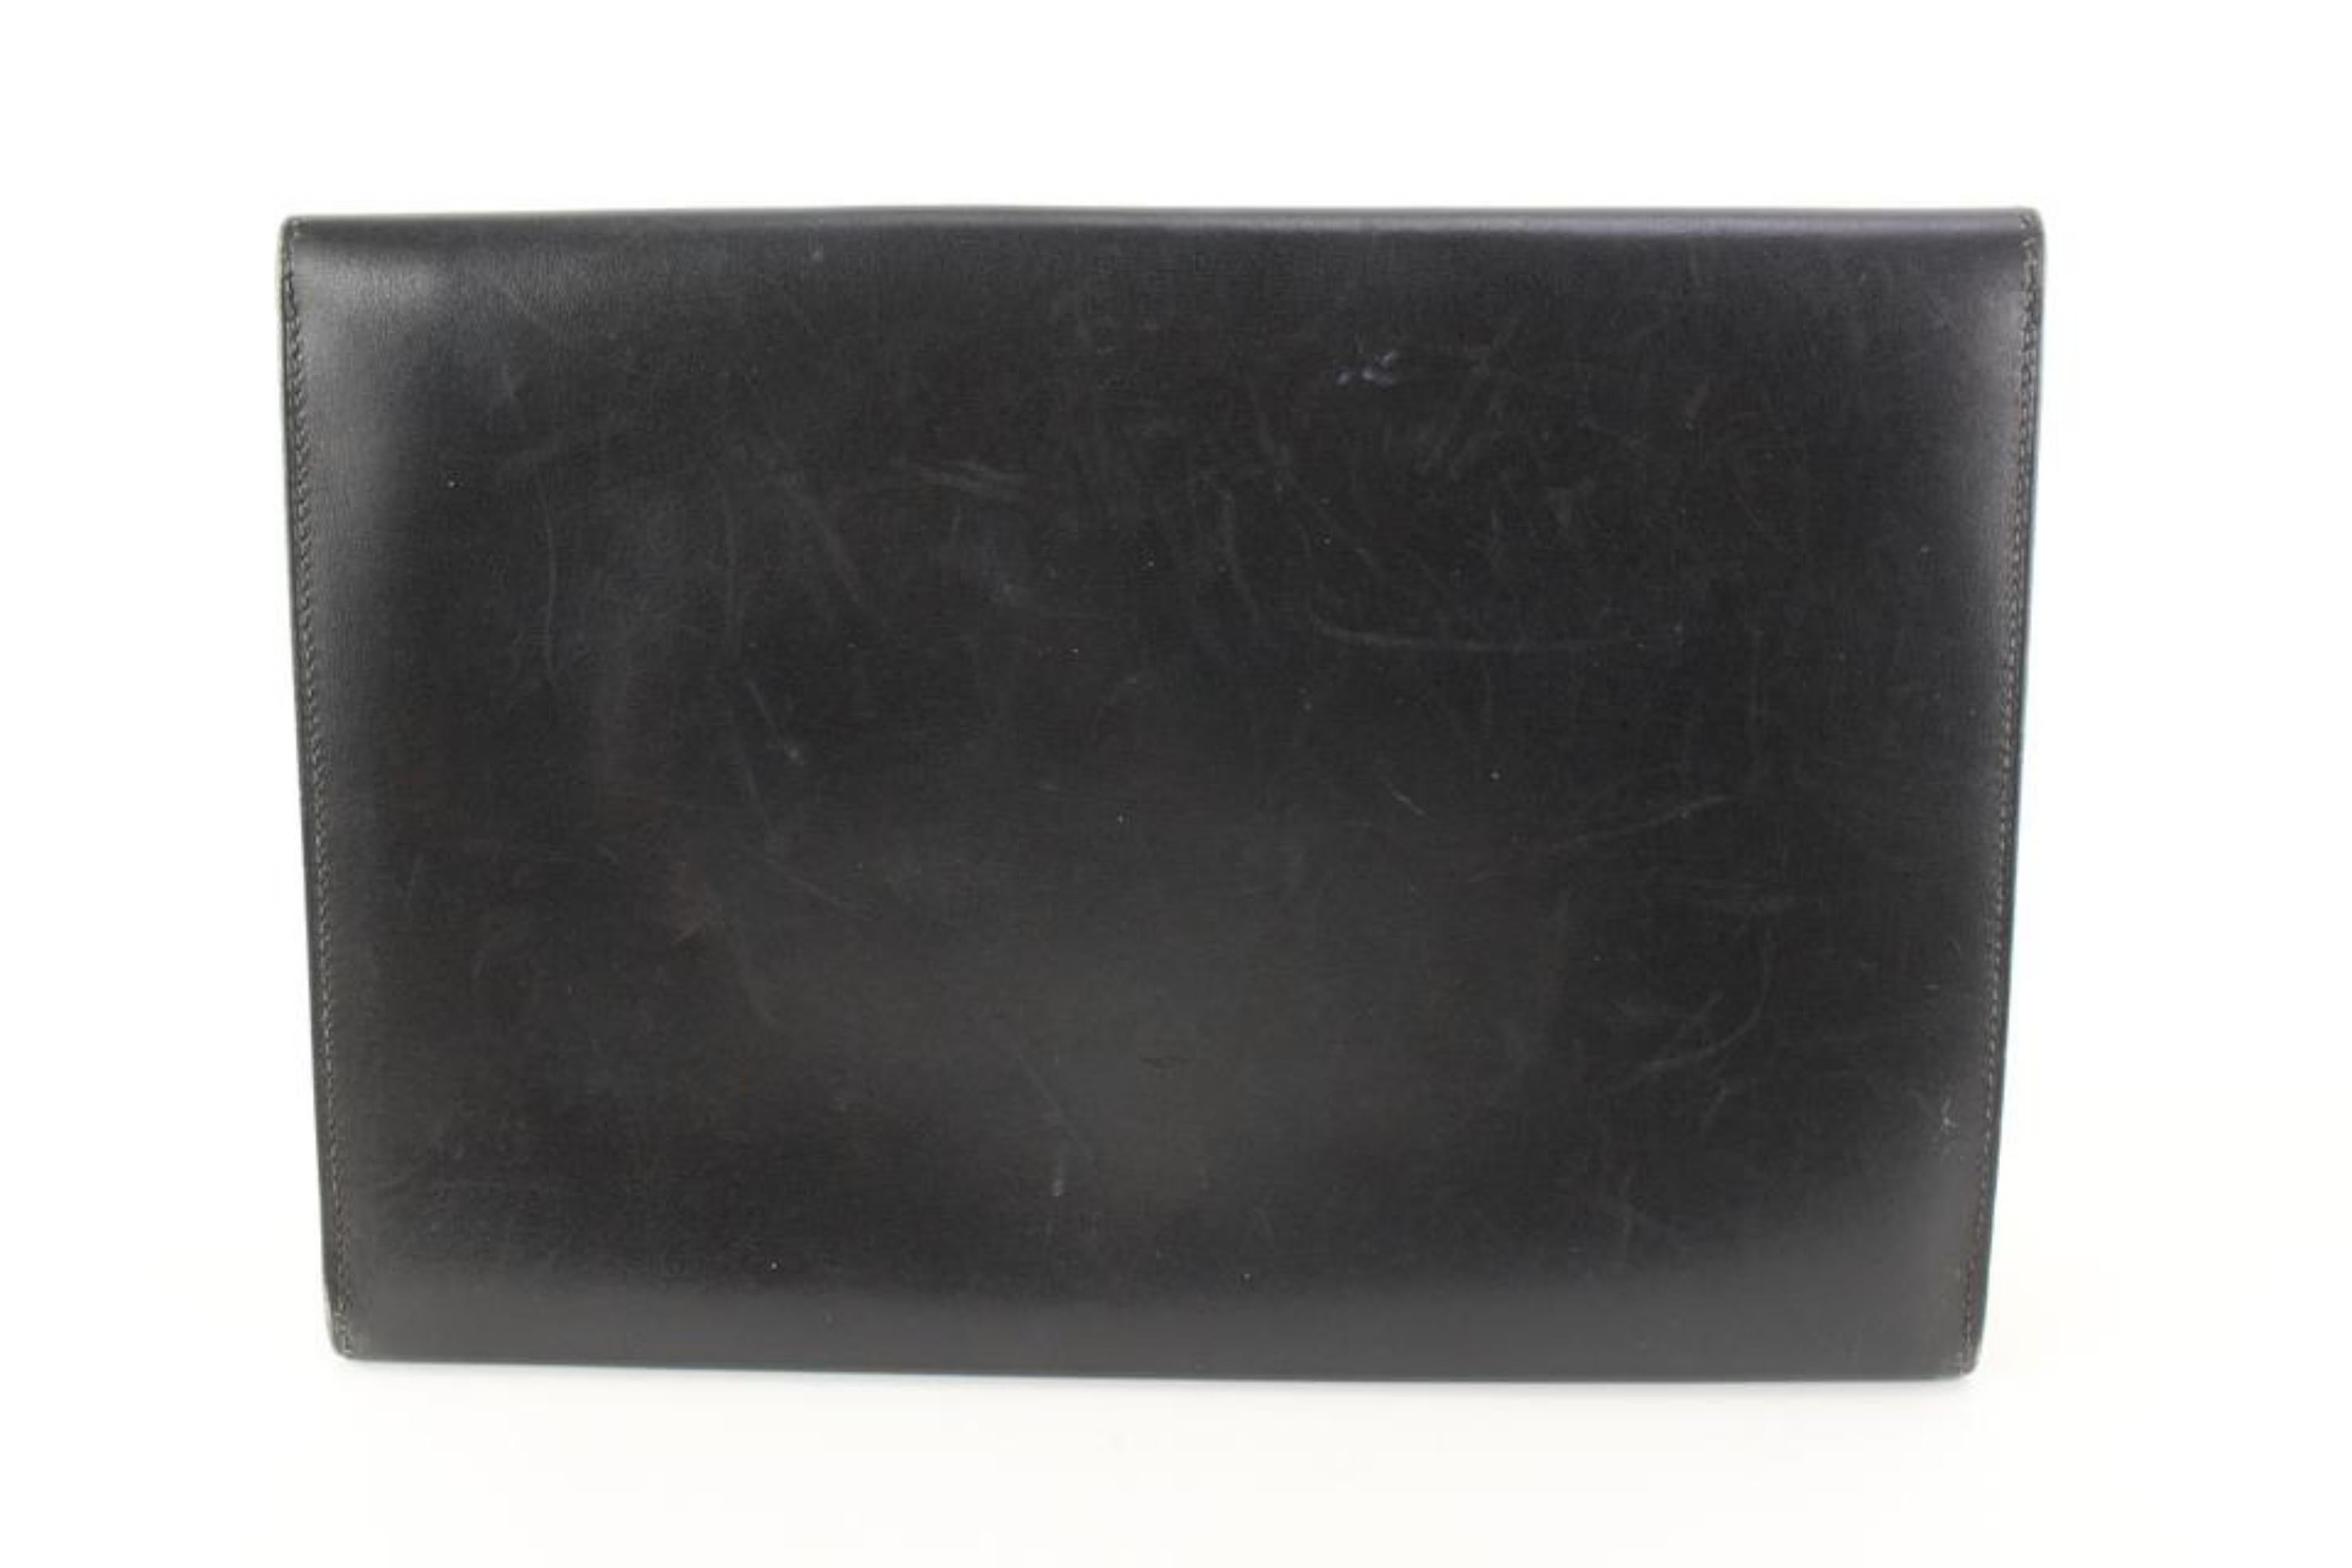 Hermès Black Box Calf Leather Pochette Rio Clutch 81h615s In Good Condition For Sale In Dix hills, NY